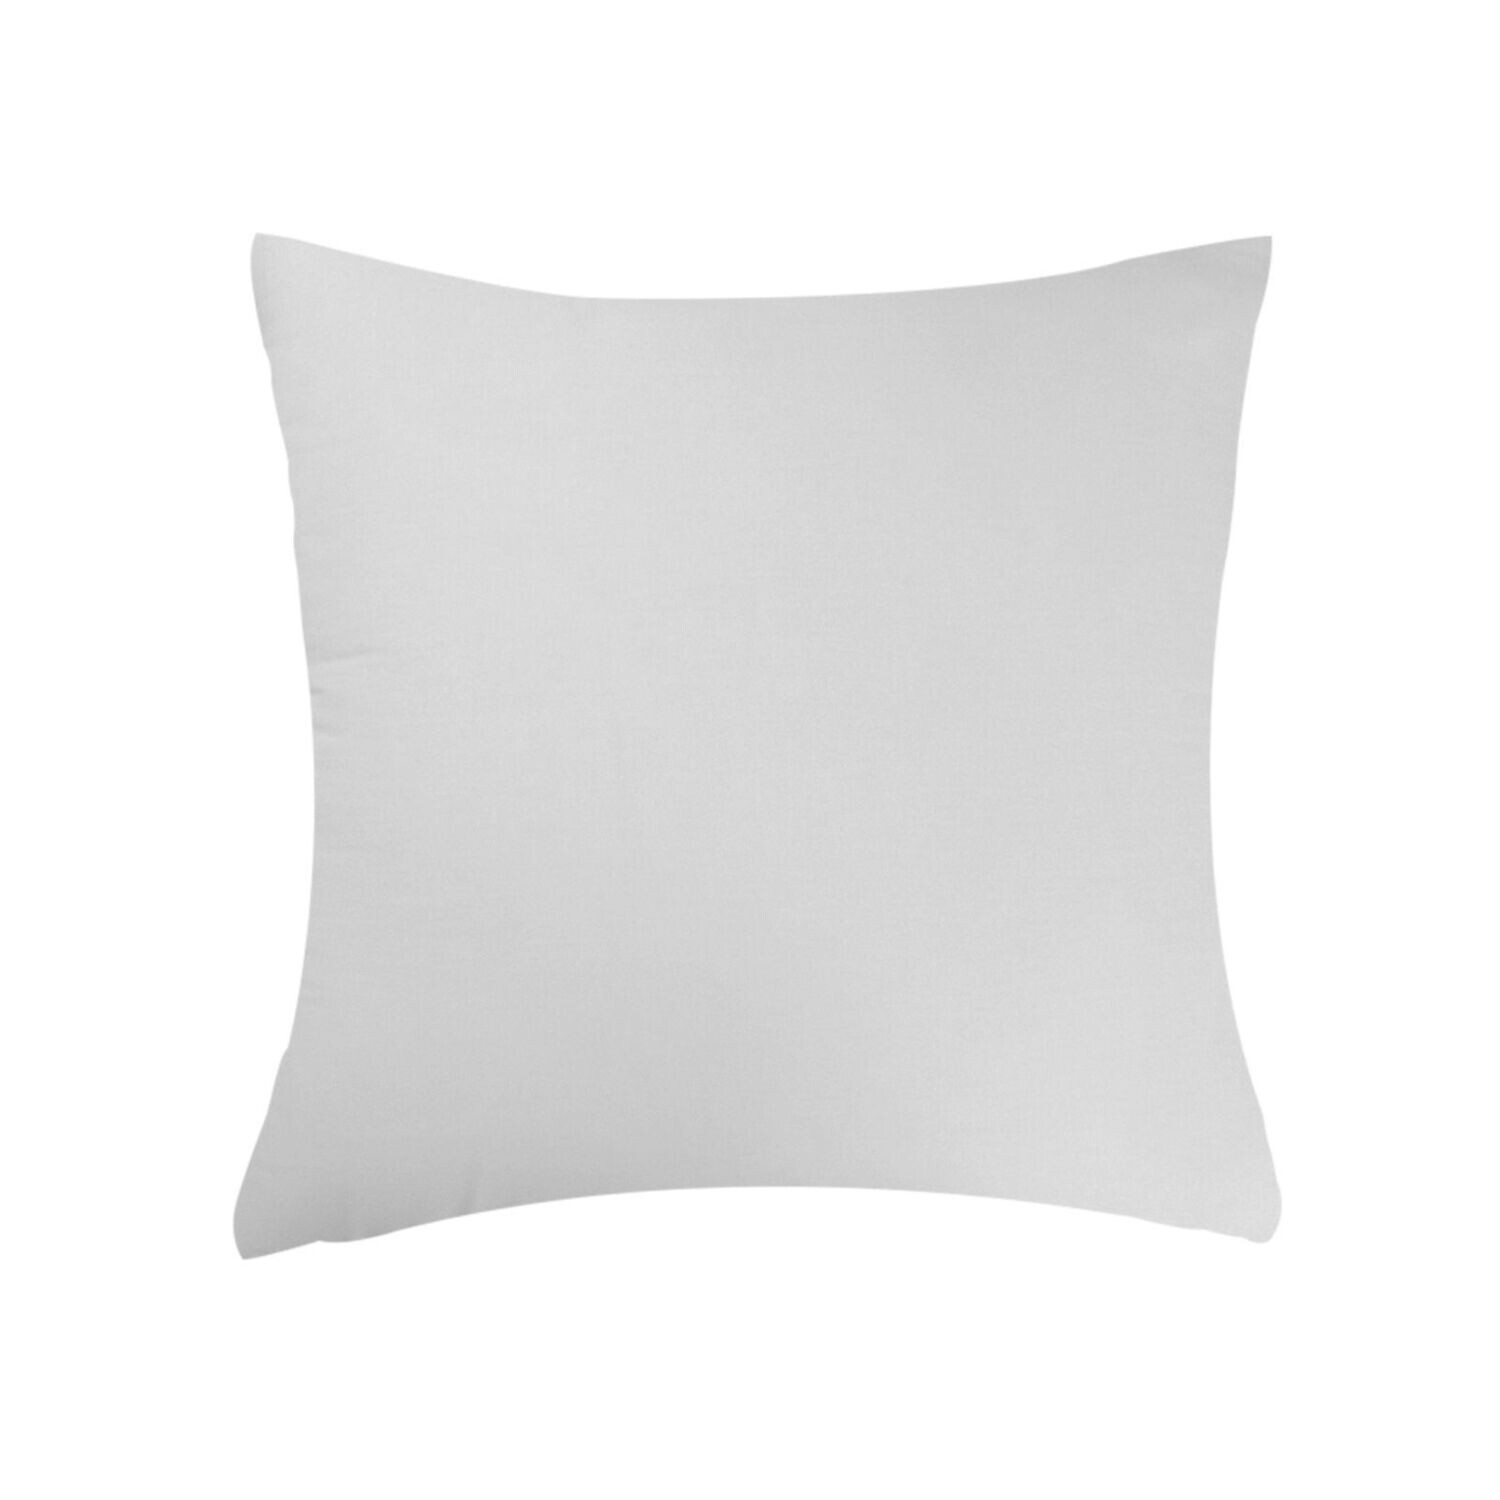 Imbottitura interna bianca per cuscini gr.525 Tessitura Toscana Telerie